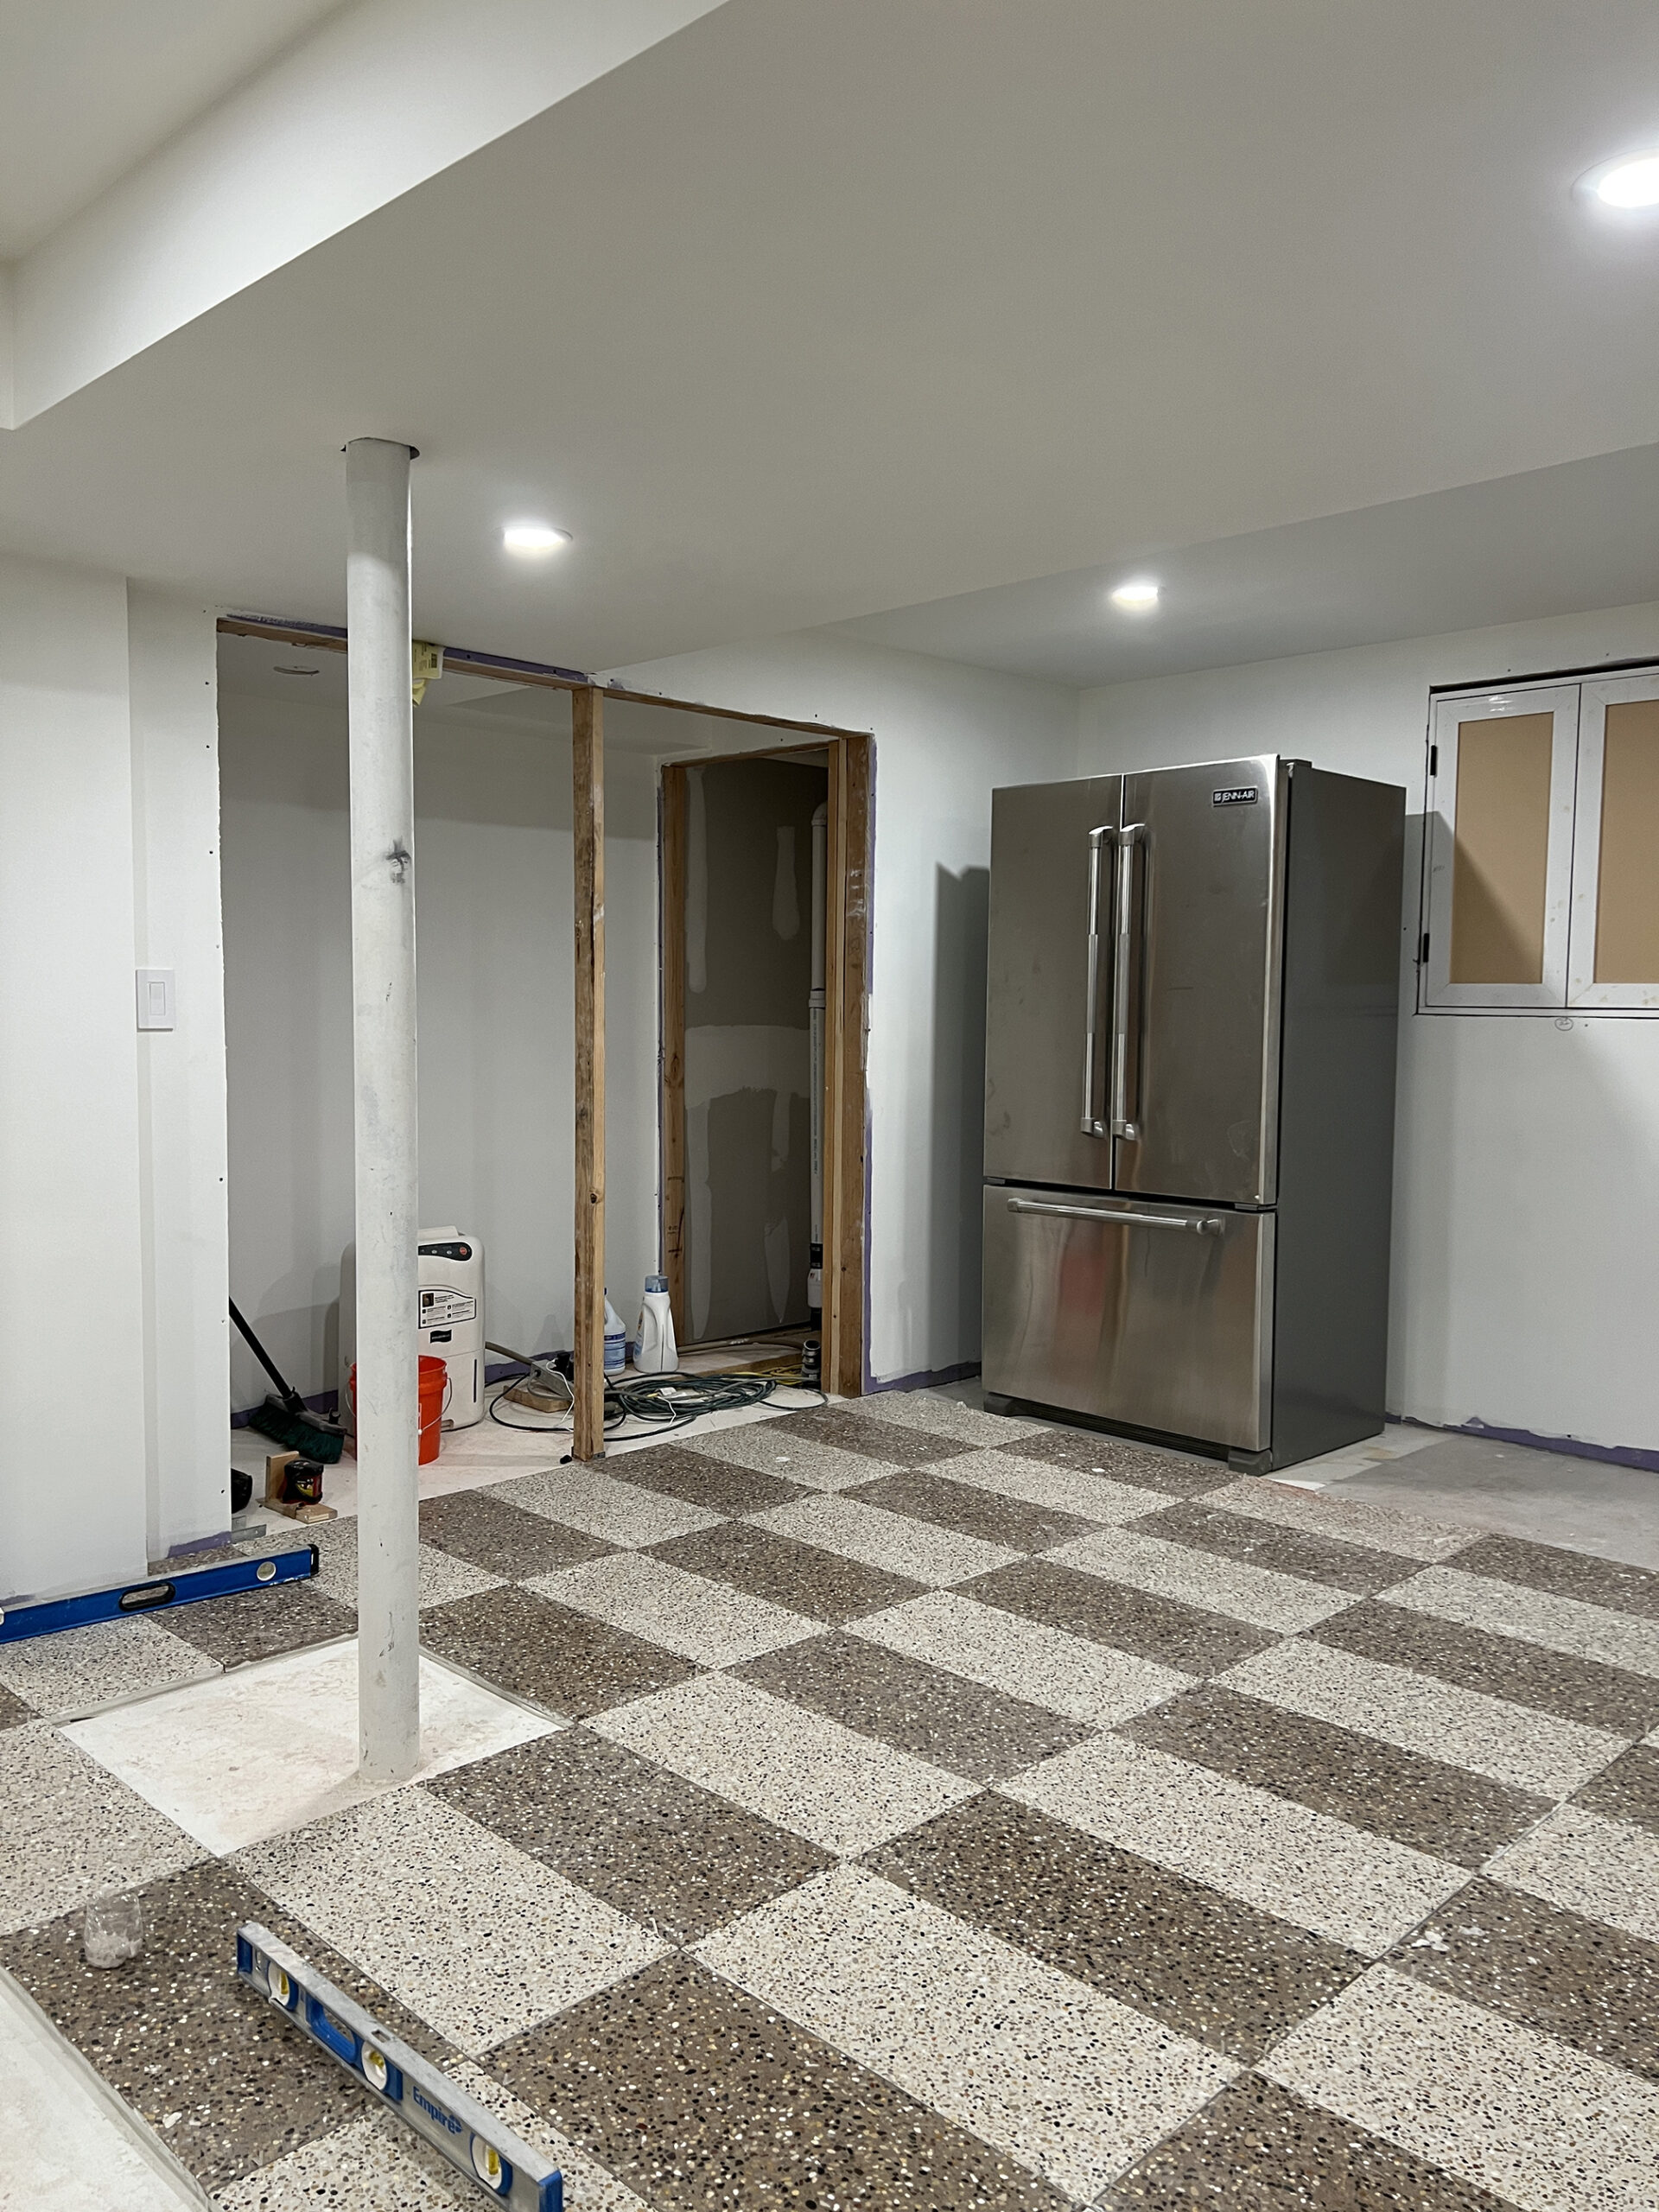 floor tile being installed